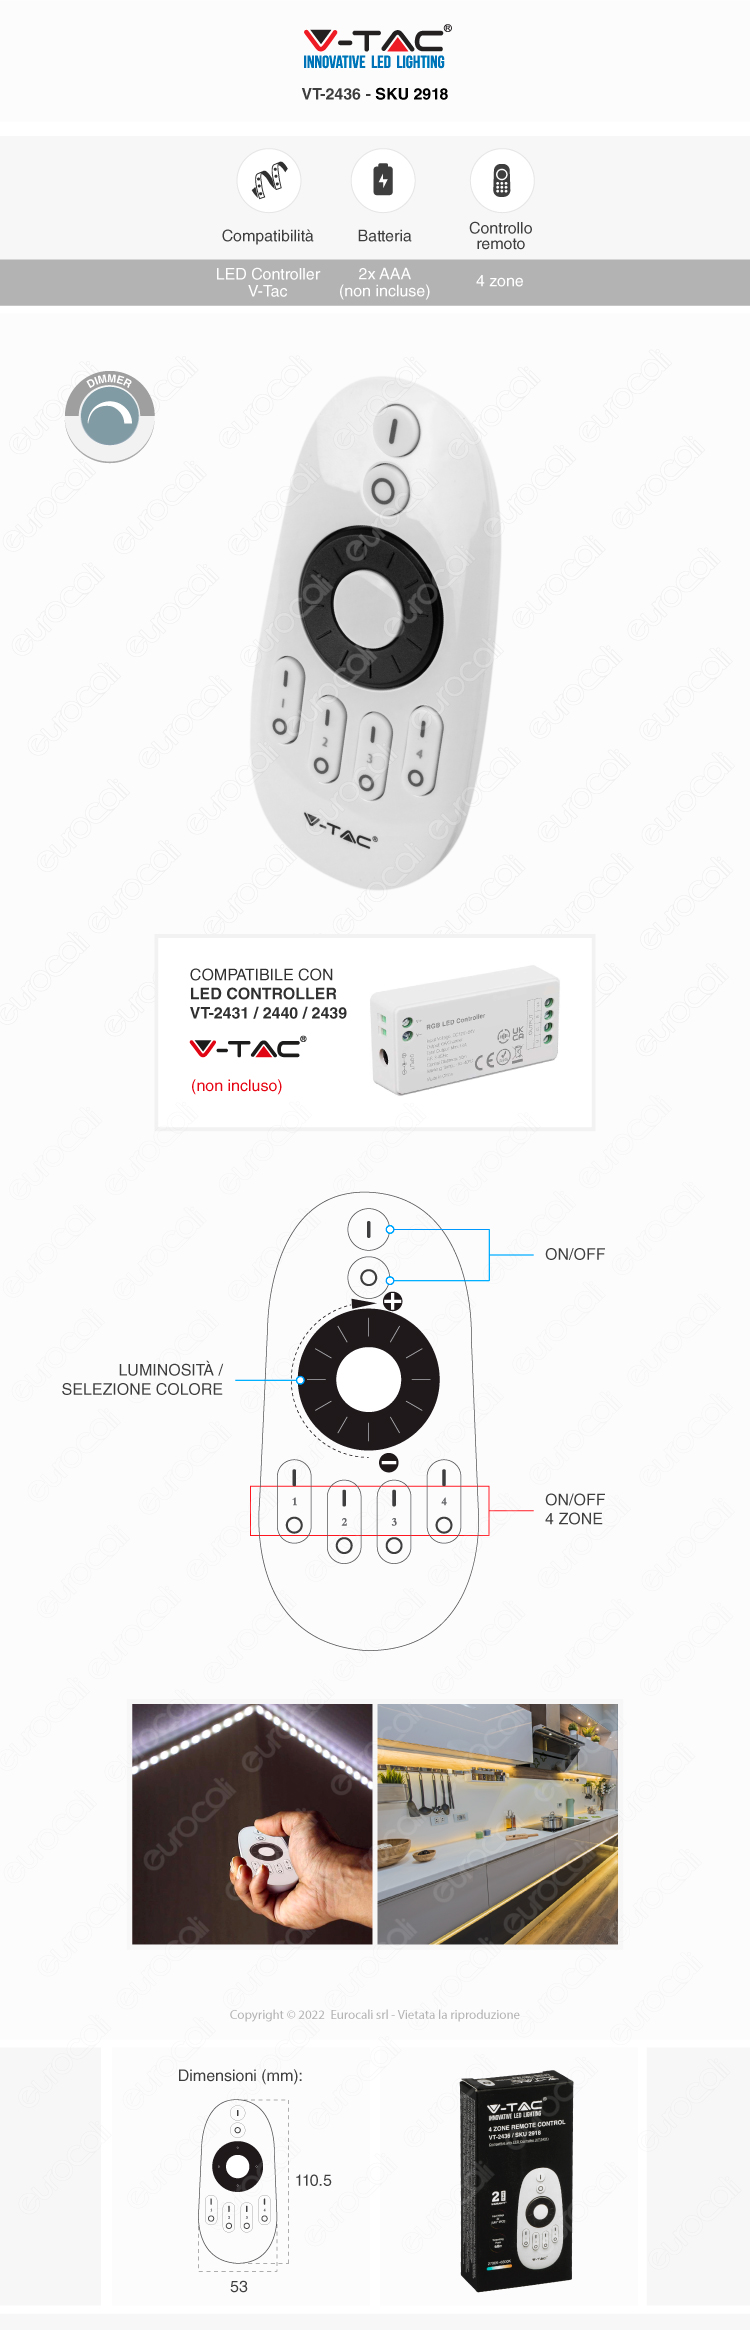 v-tac vt-2436 4-zone remote control wireless per controller strisce led